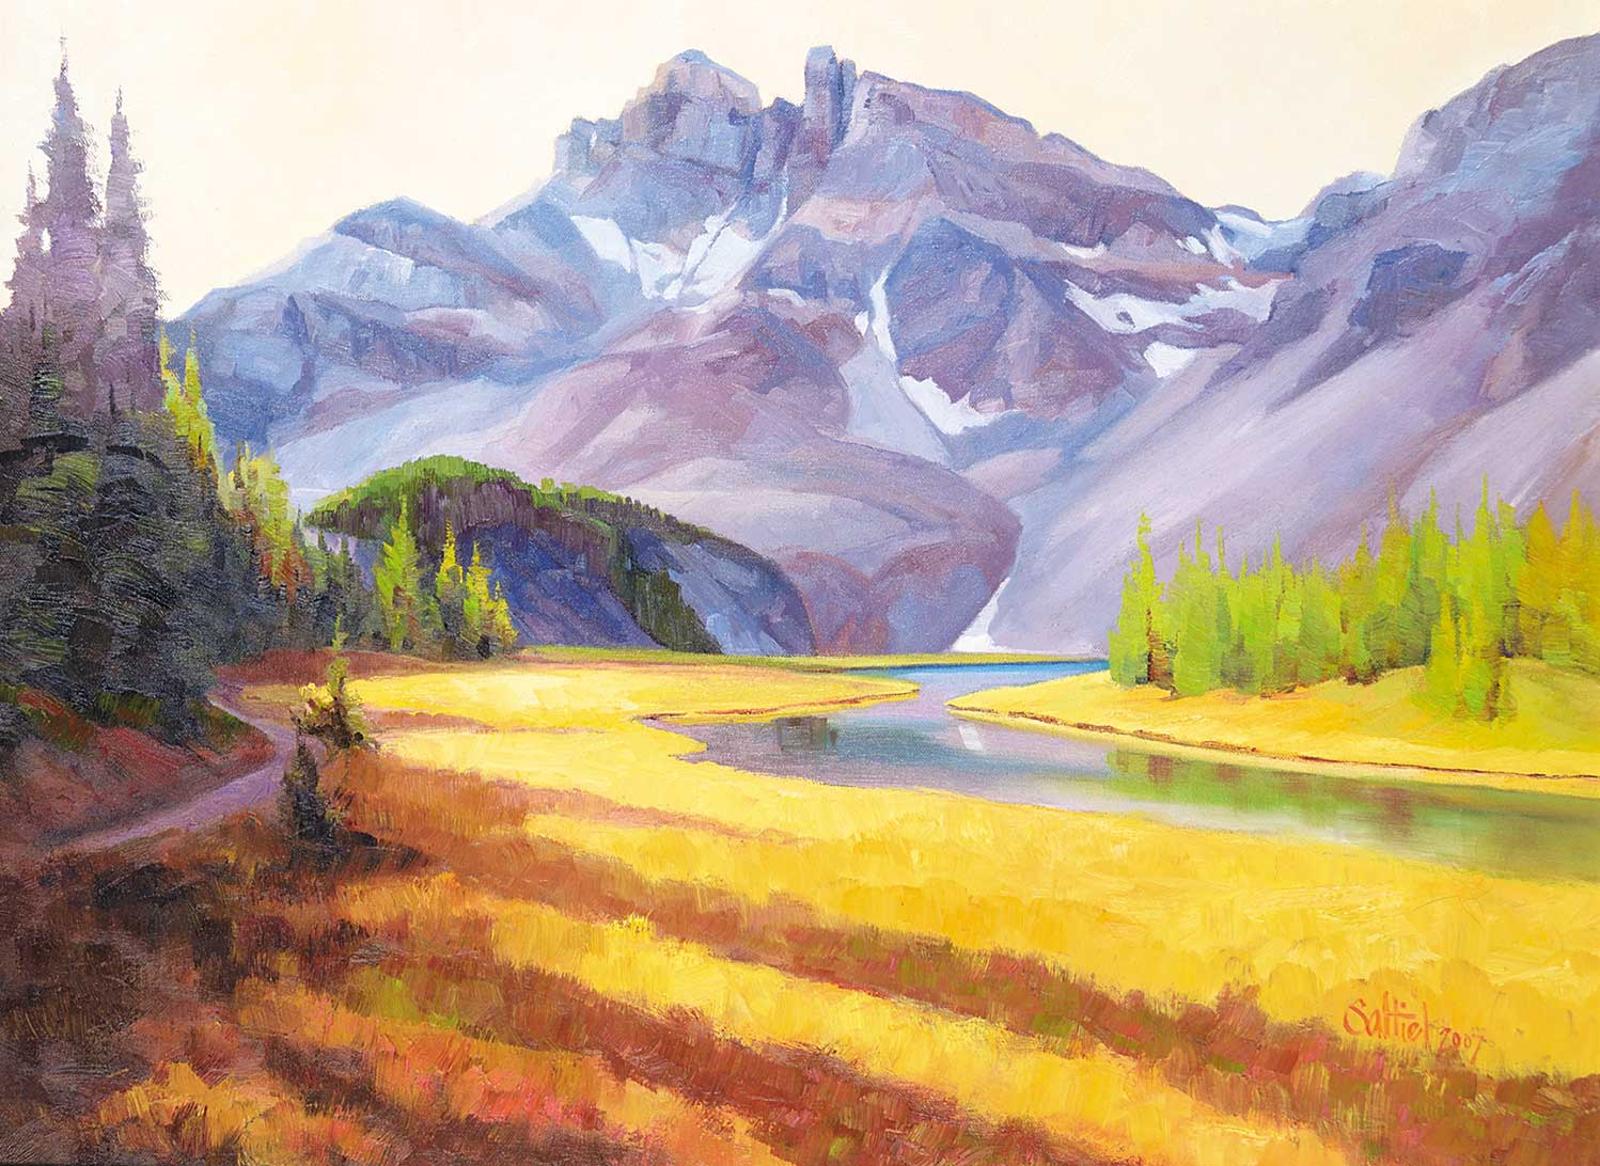 Alice Saltiel-Marshall (1948) - Autumn Glow, The Towers, Mt. Assiniboine area B.C.